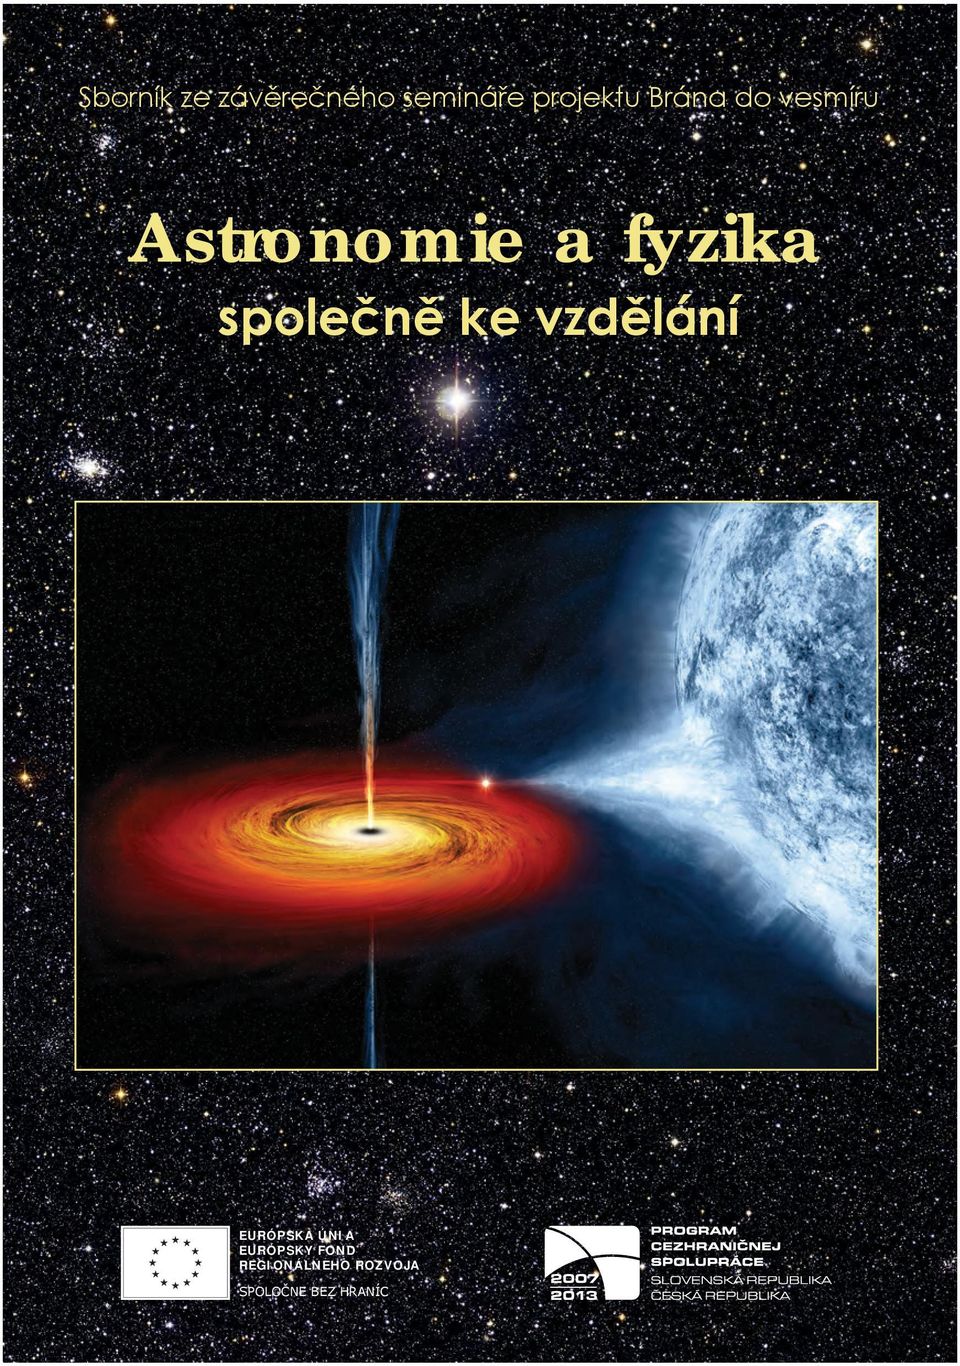 Astronomie a fyzika - společně ke vzdělání společně ke vzdělání Pór a jasné magnetické elementy (vľavo), vynárajúca sa aktívna oblasť (uprostred) a slnečná škvrna (vpravo) na